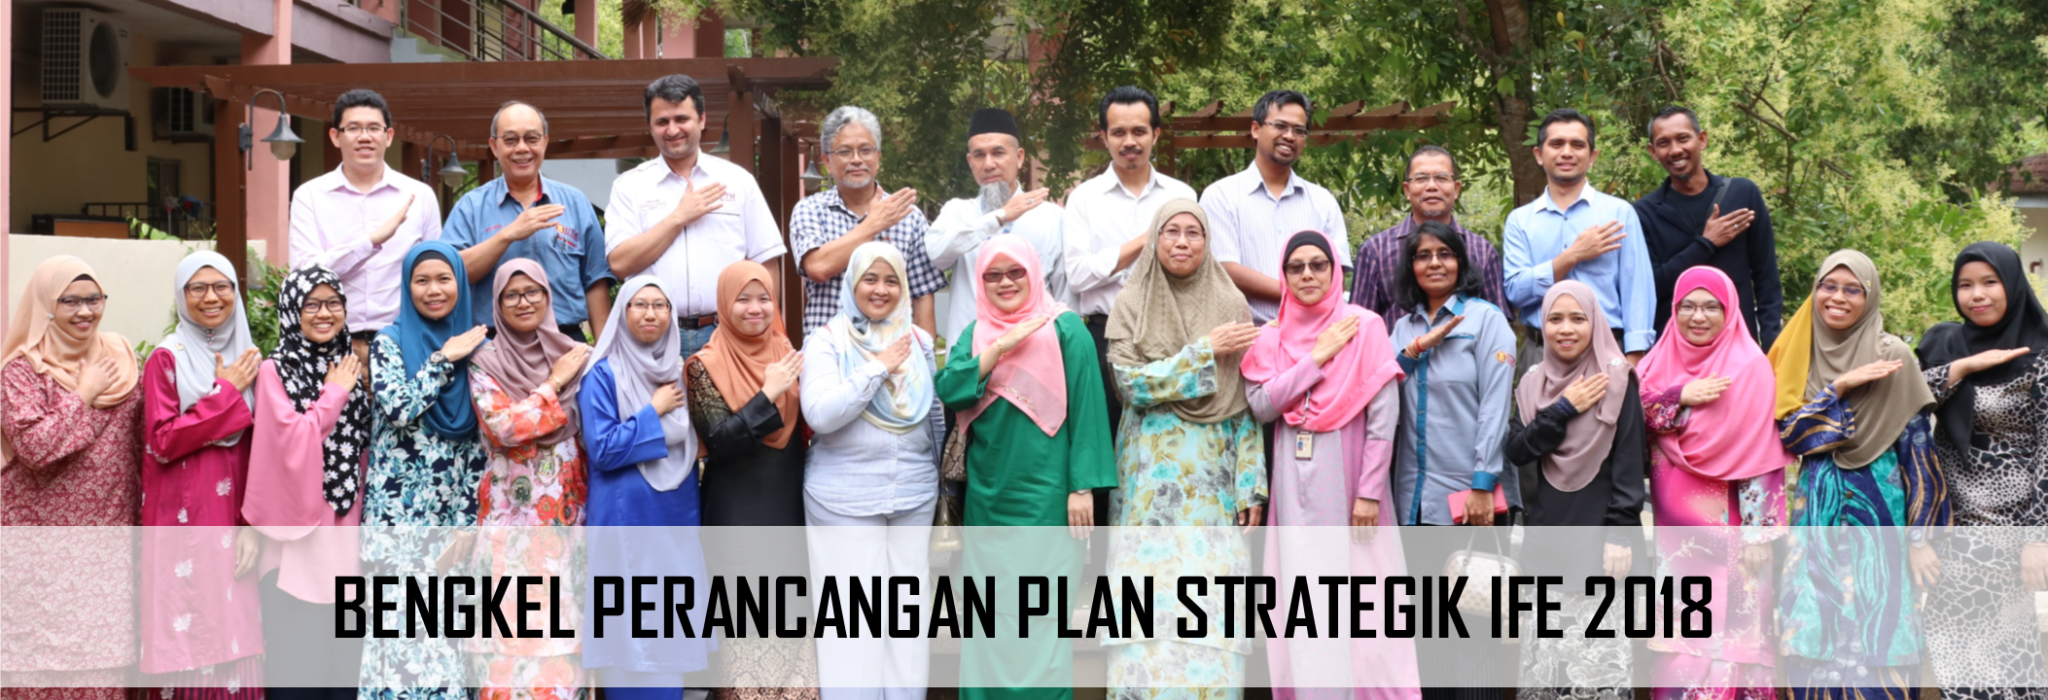 Bengkel Perancangan Plan Strategik IFE 2018